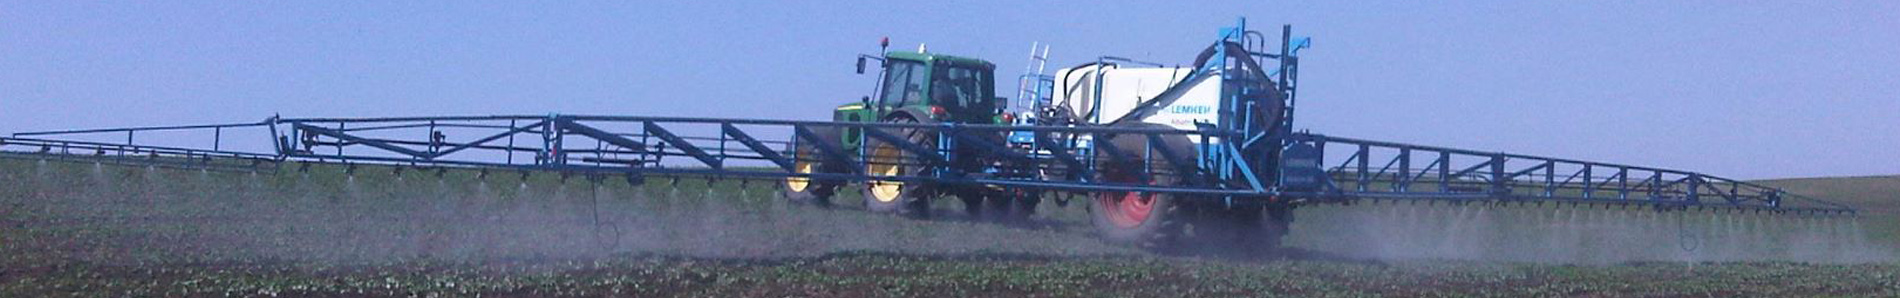 ABC Tractors Banner